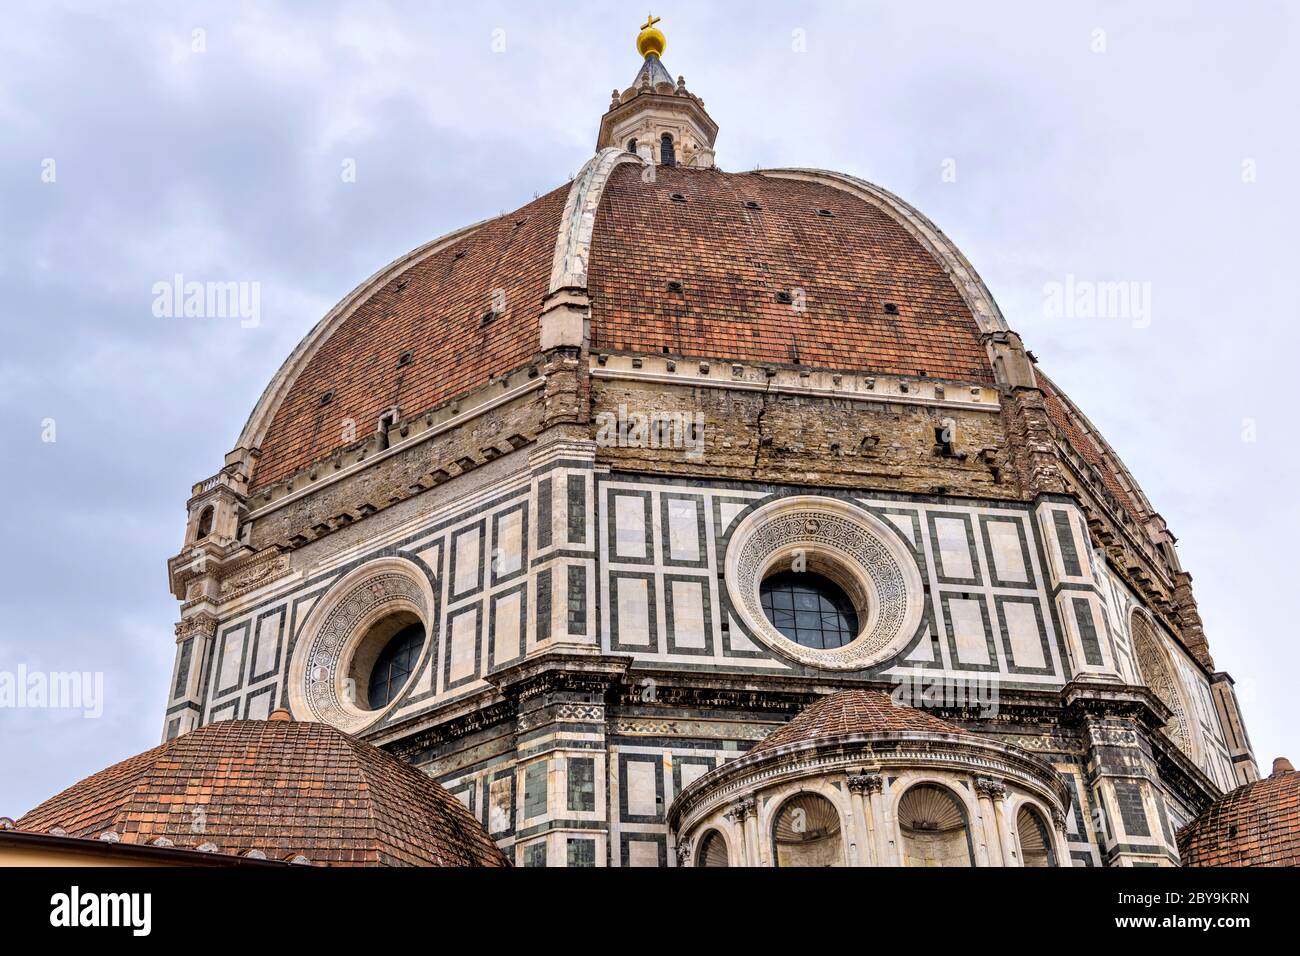 Cúpula de Brunelleschi - una vista de cerca de la cúpula del siglo XV de la Catedral de Florencia. Florencia, Toscana, Italia. Foto de stock